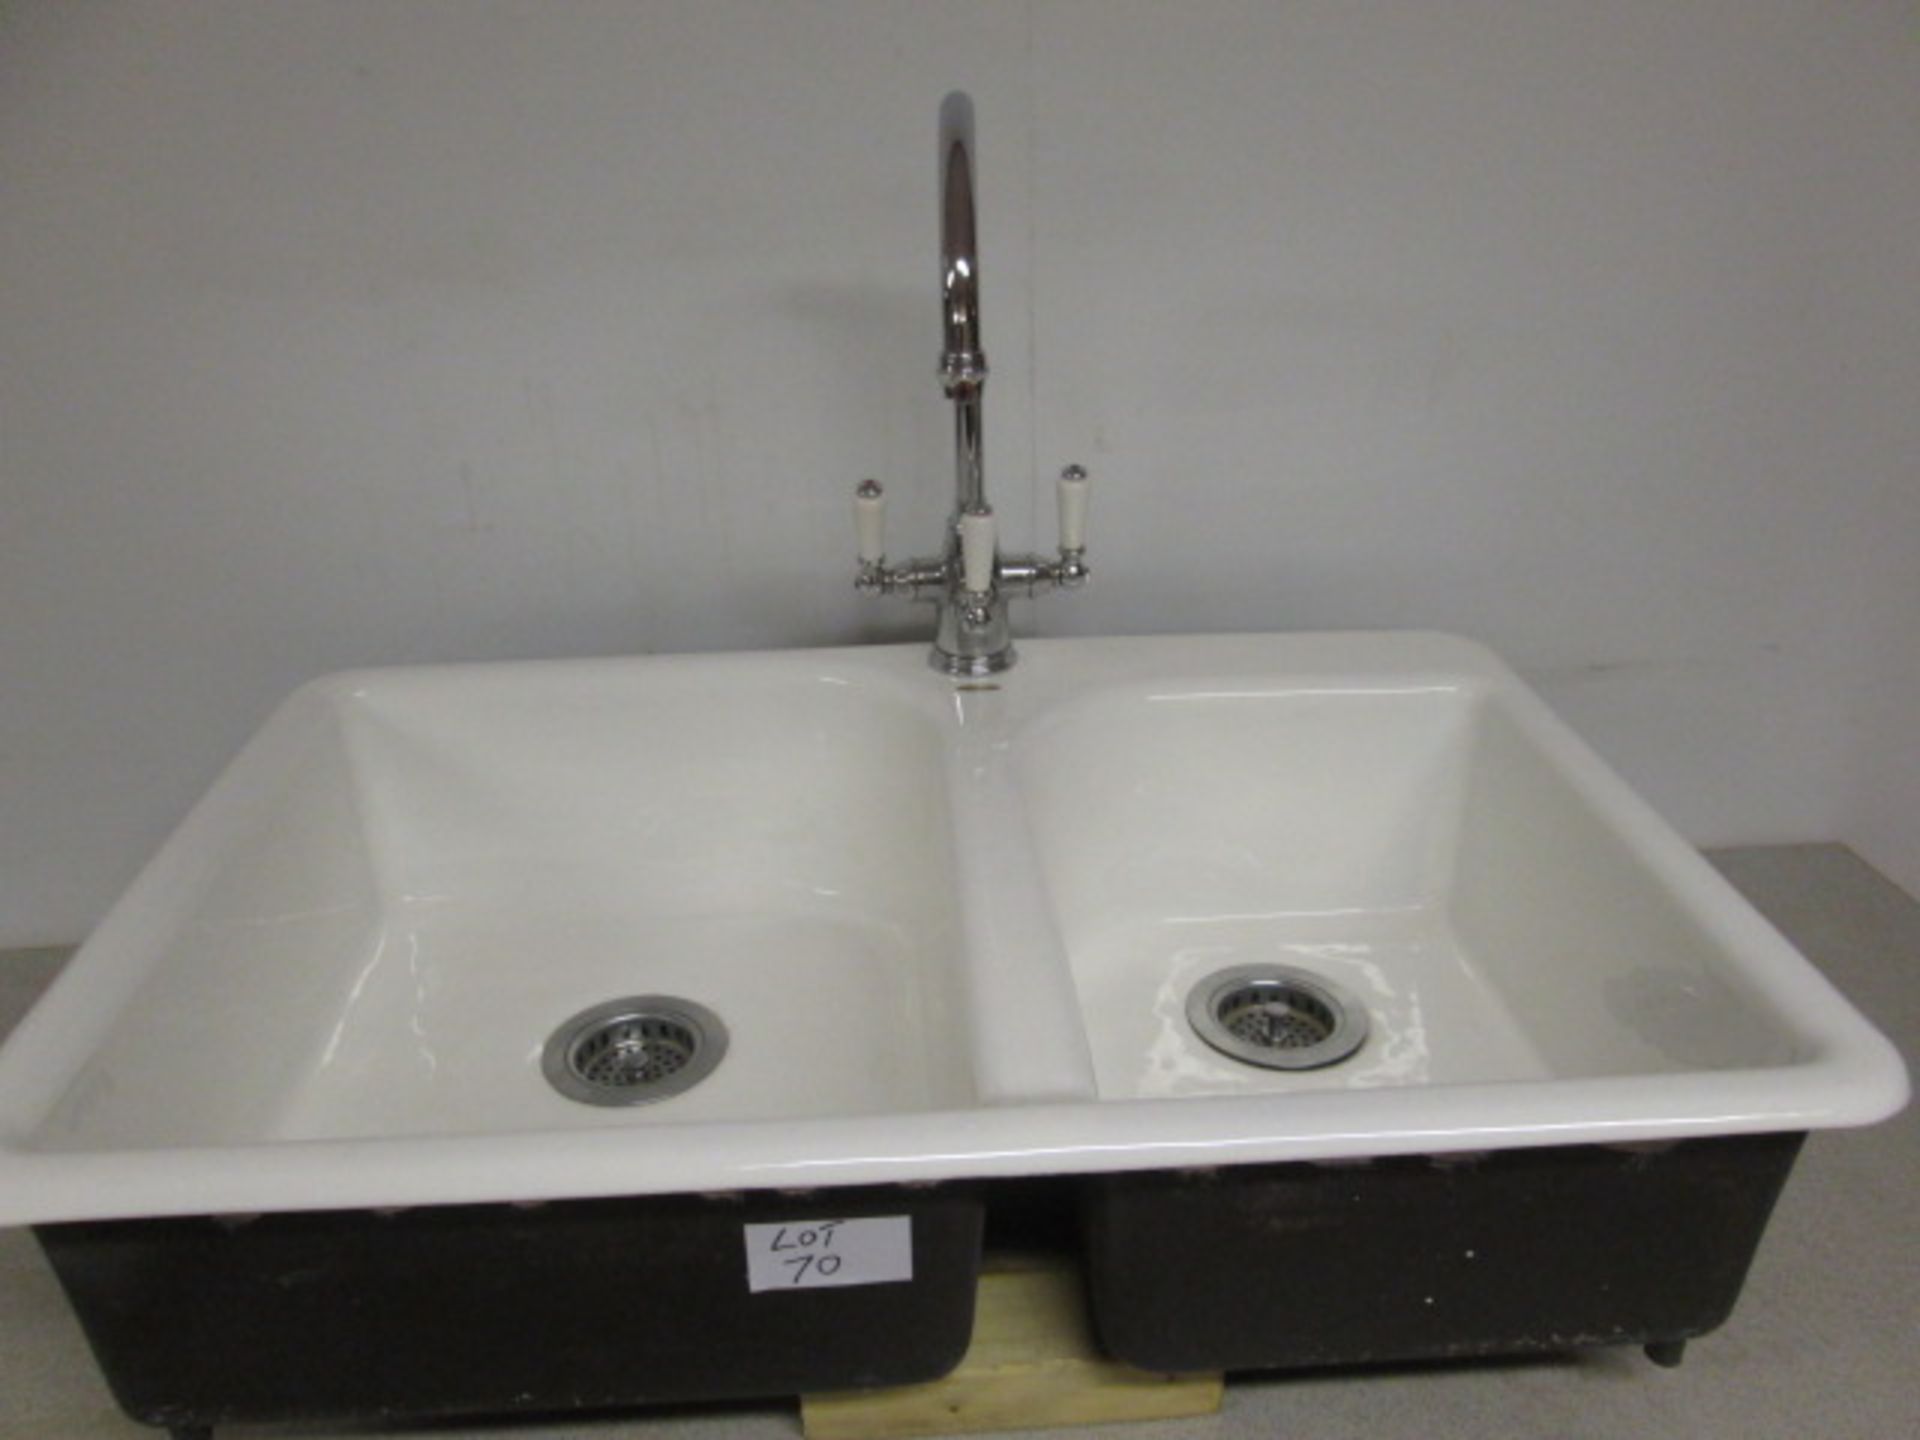 Kohler Cast Iron/Ceramic Double Sink with Monoblock lever taps